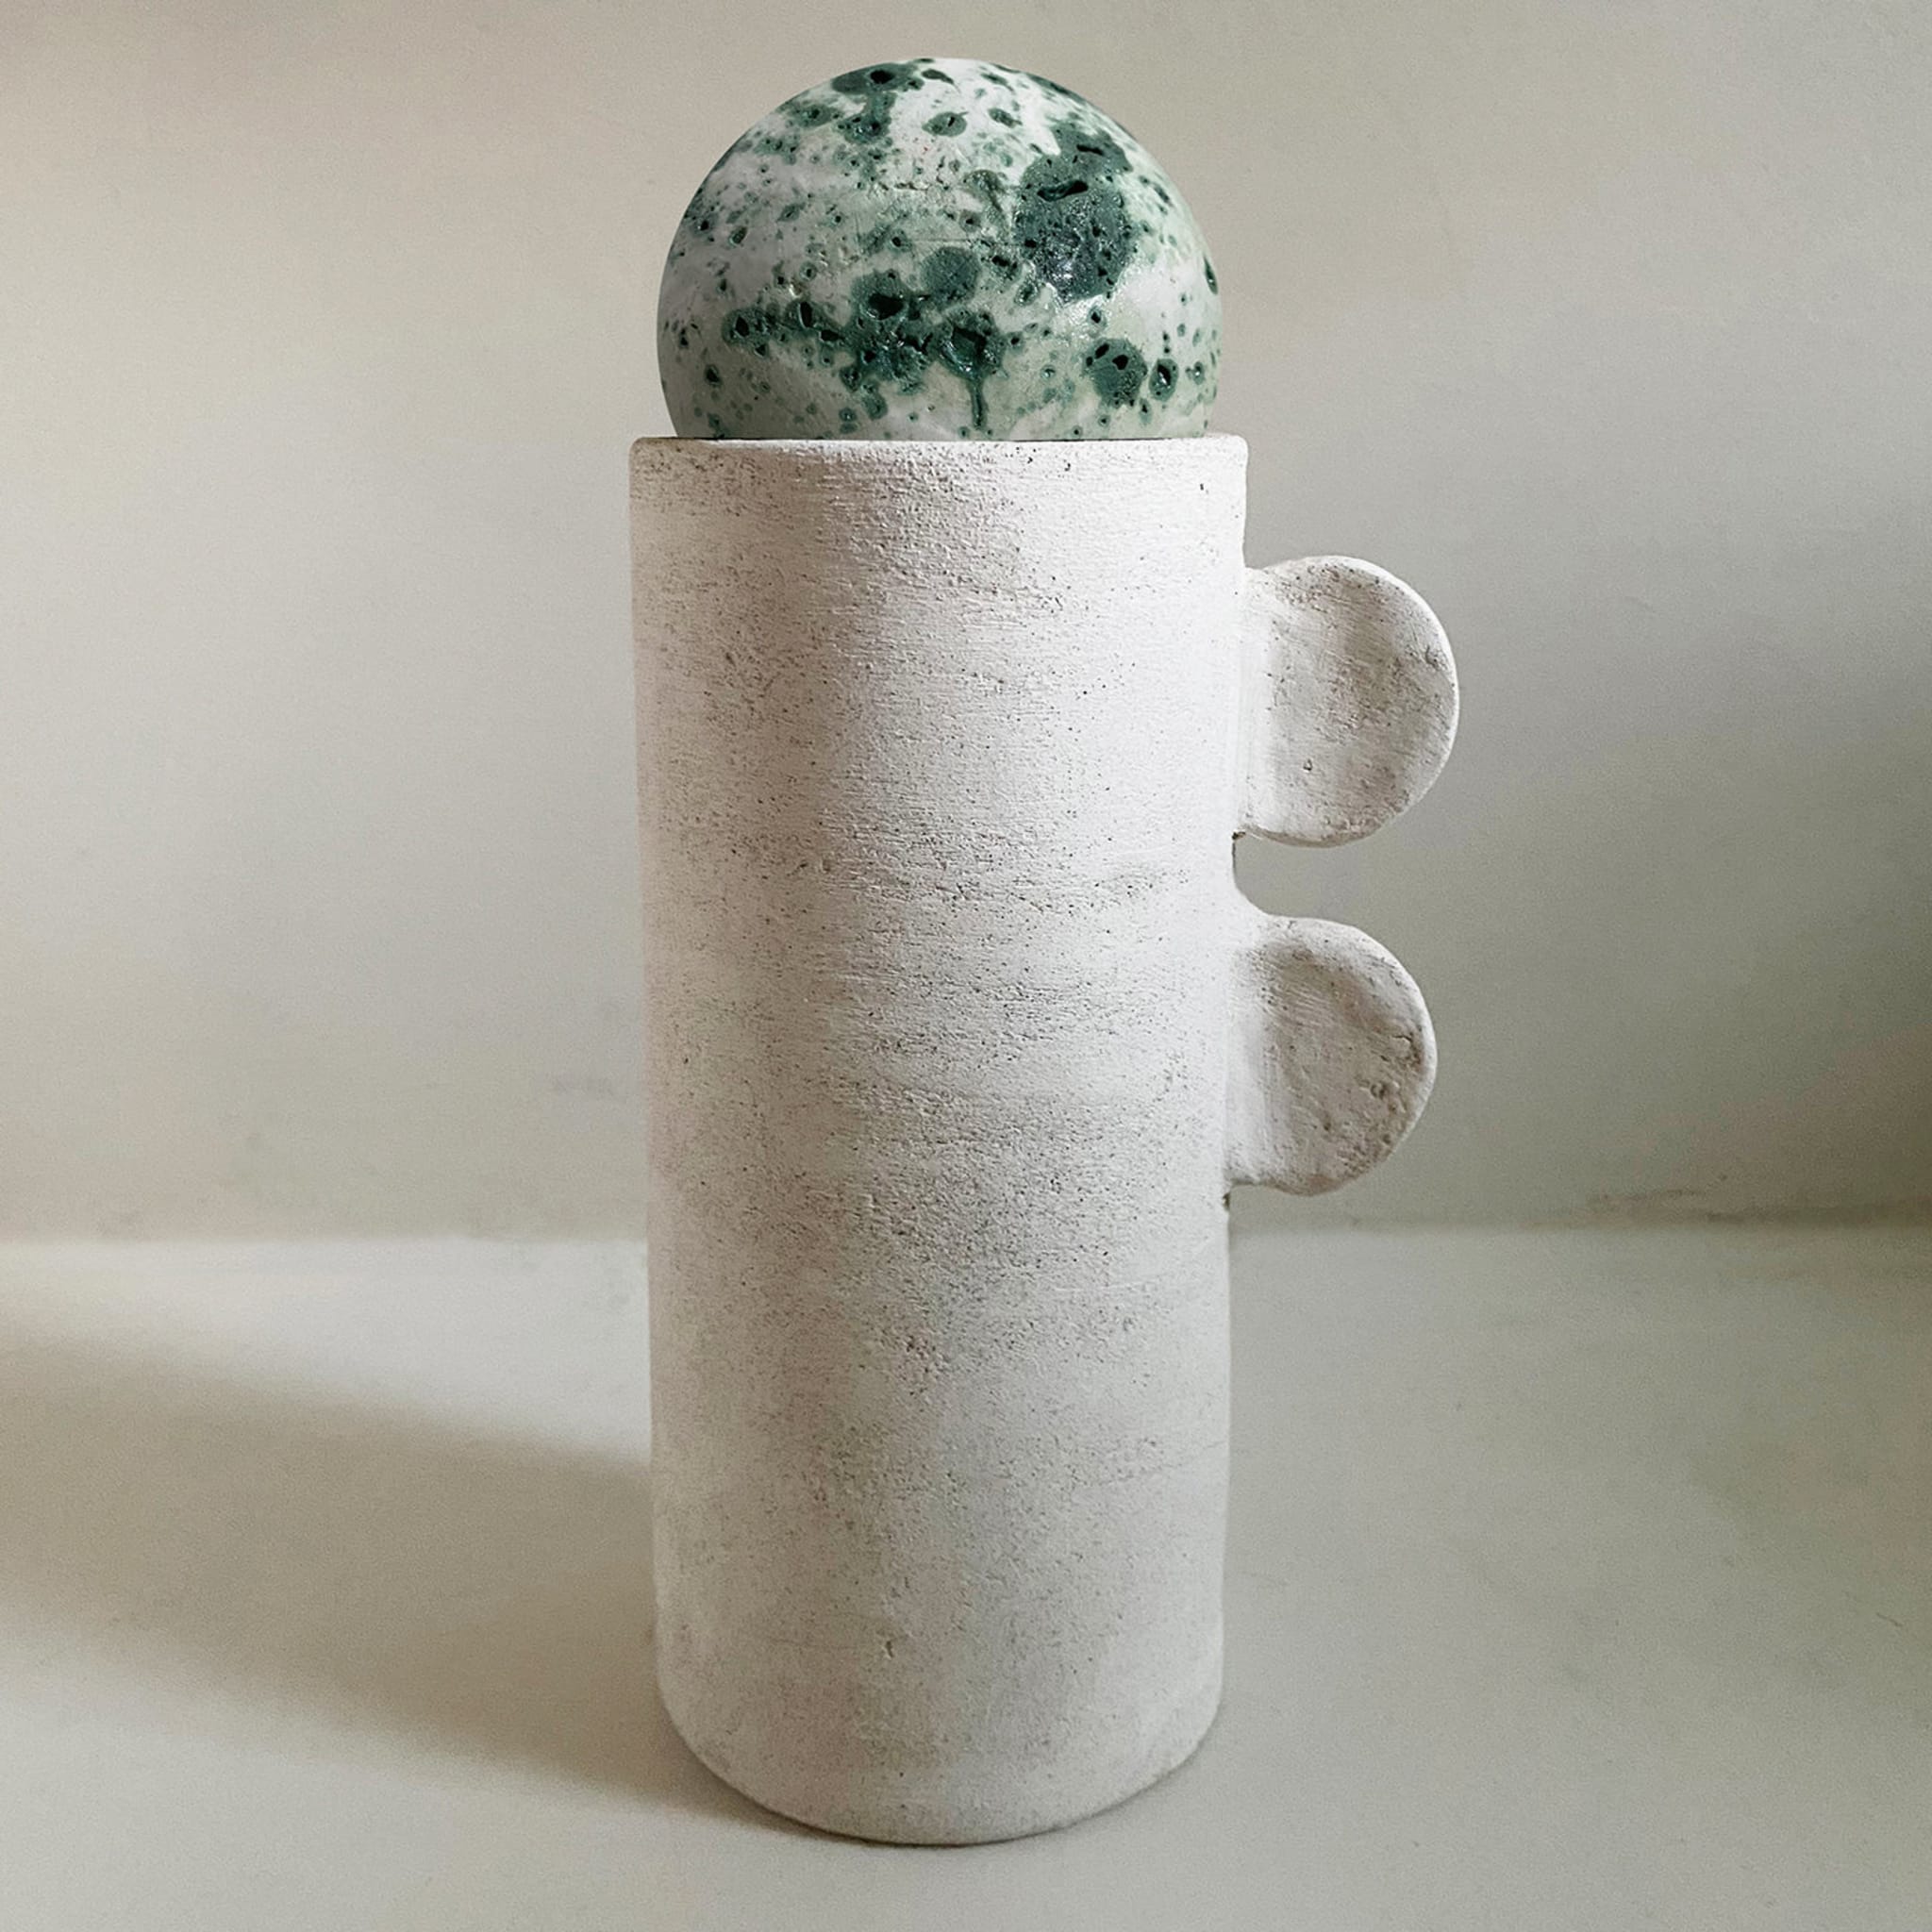 Materia Green Vase by Stefania Loschi - Alternative view 1